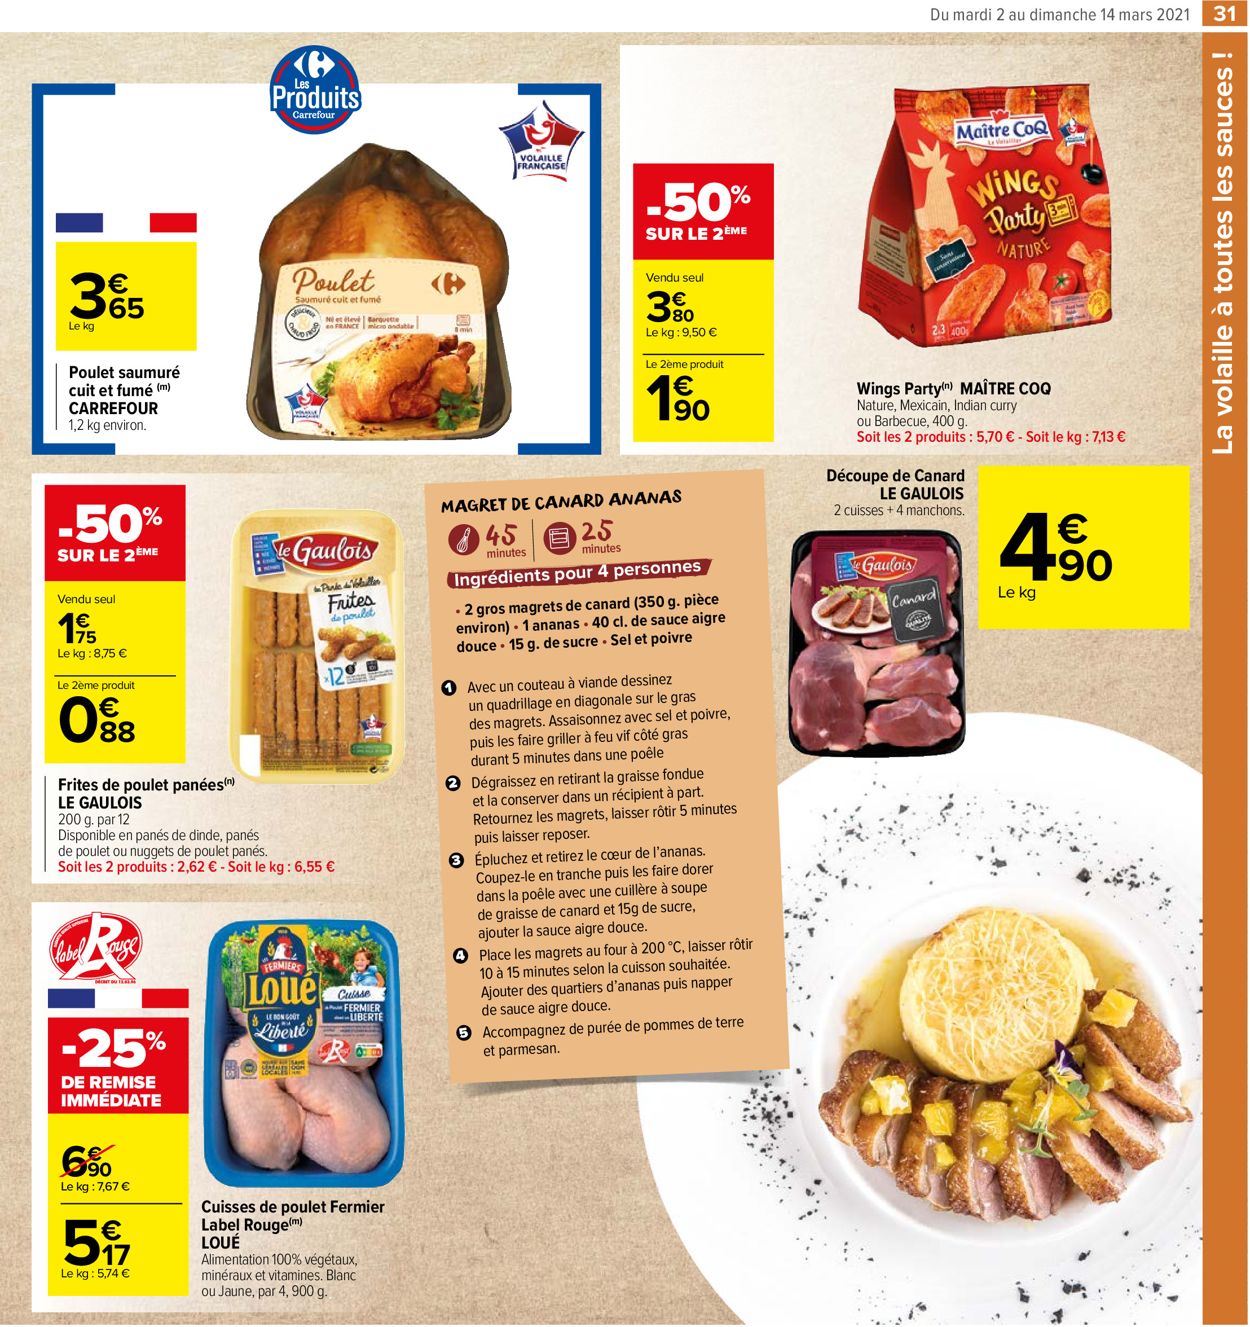 Carrefour Catalogue - 02.03-14.03.2021 (Page 31)